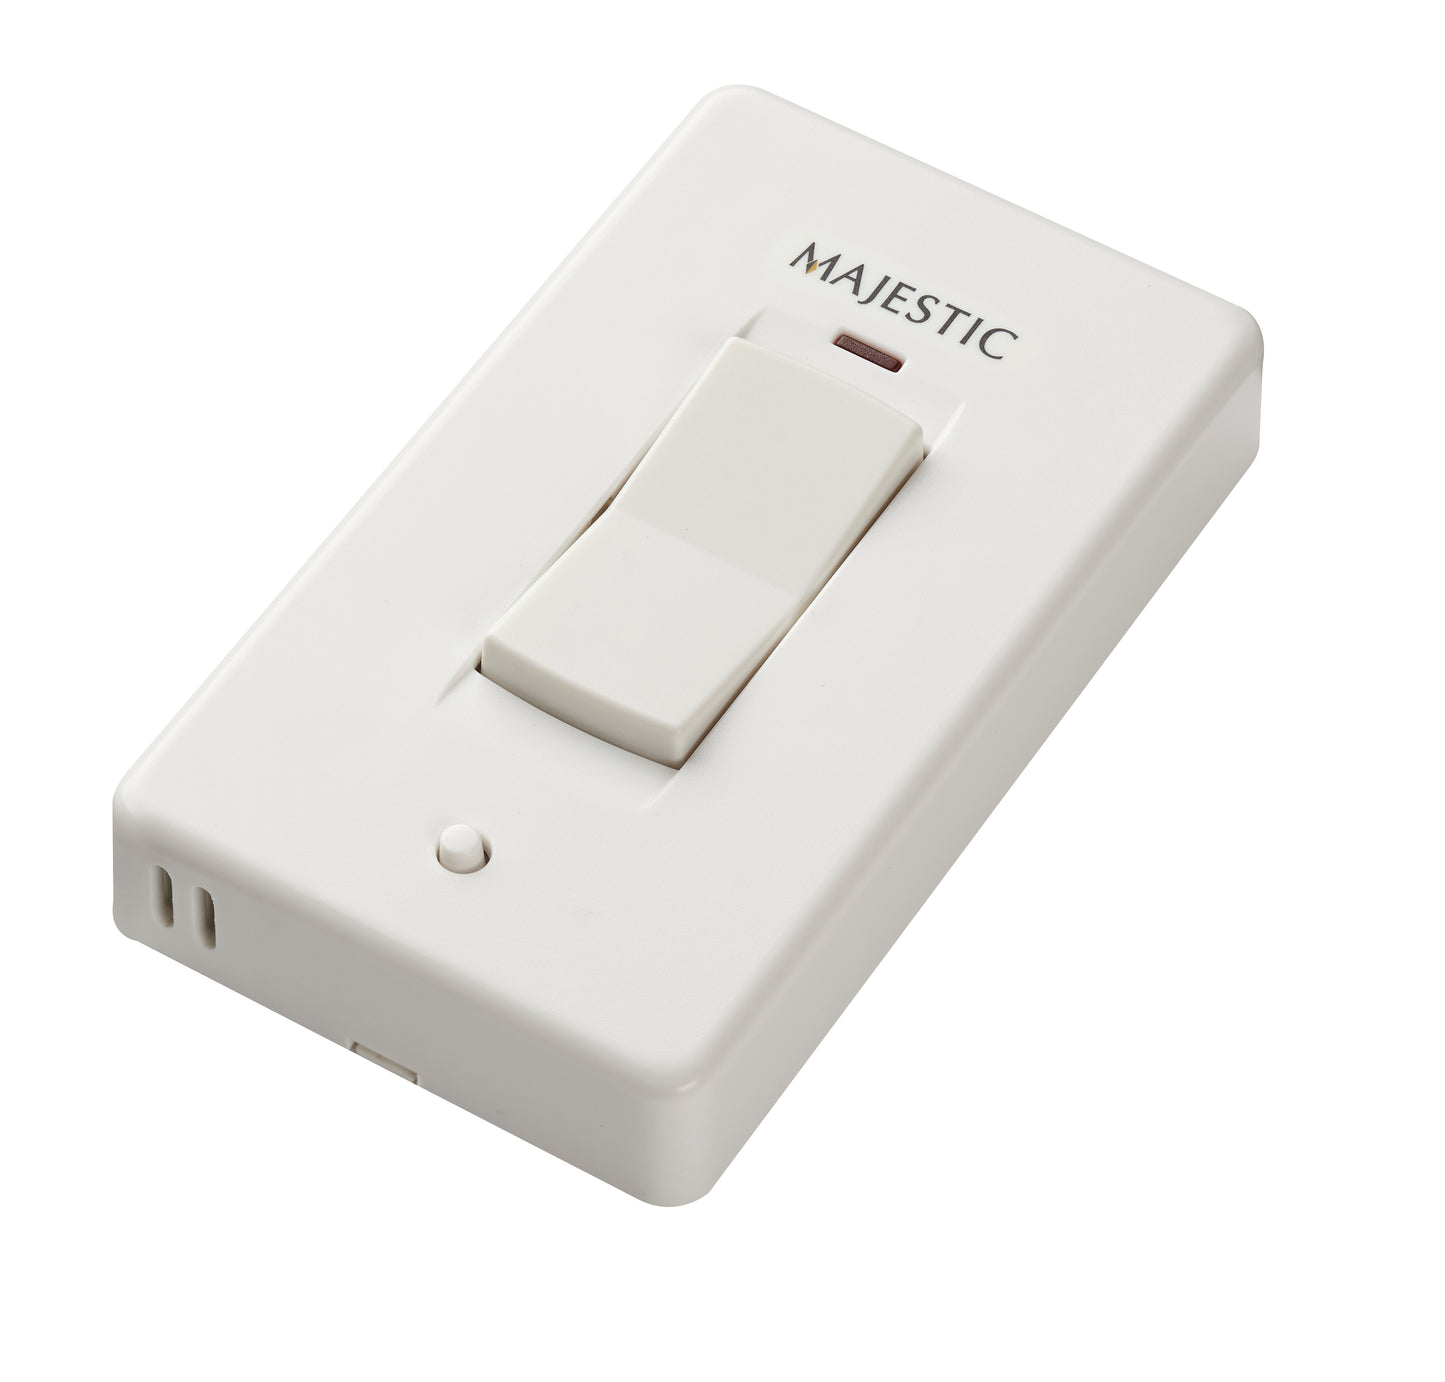 Majestic IntelliFire Touch White Wireless Wall Switch | IFT-RC150 |